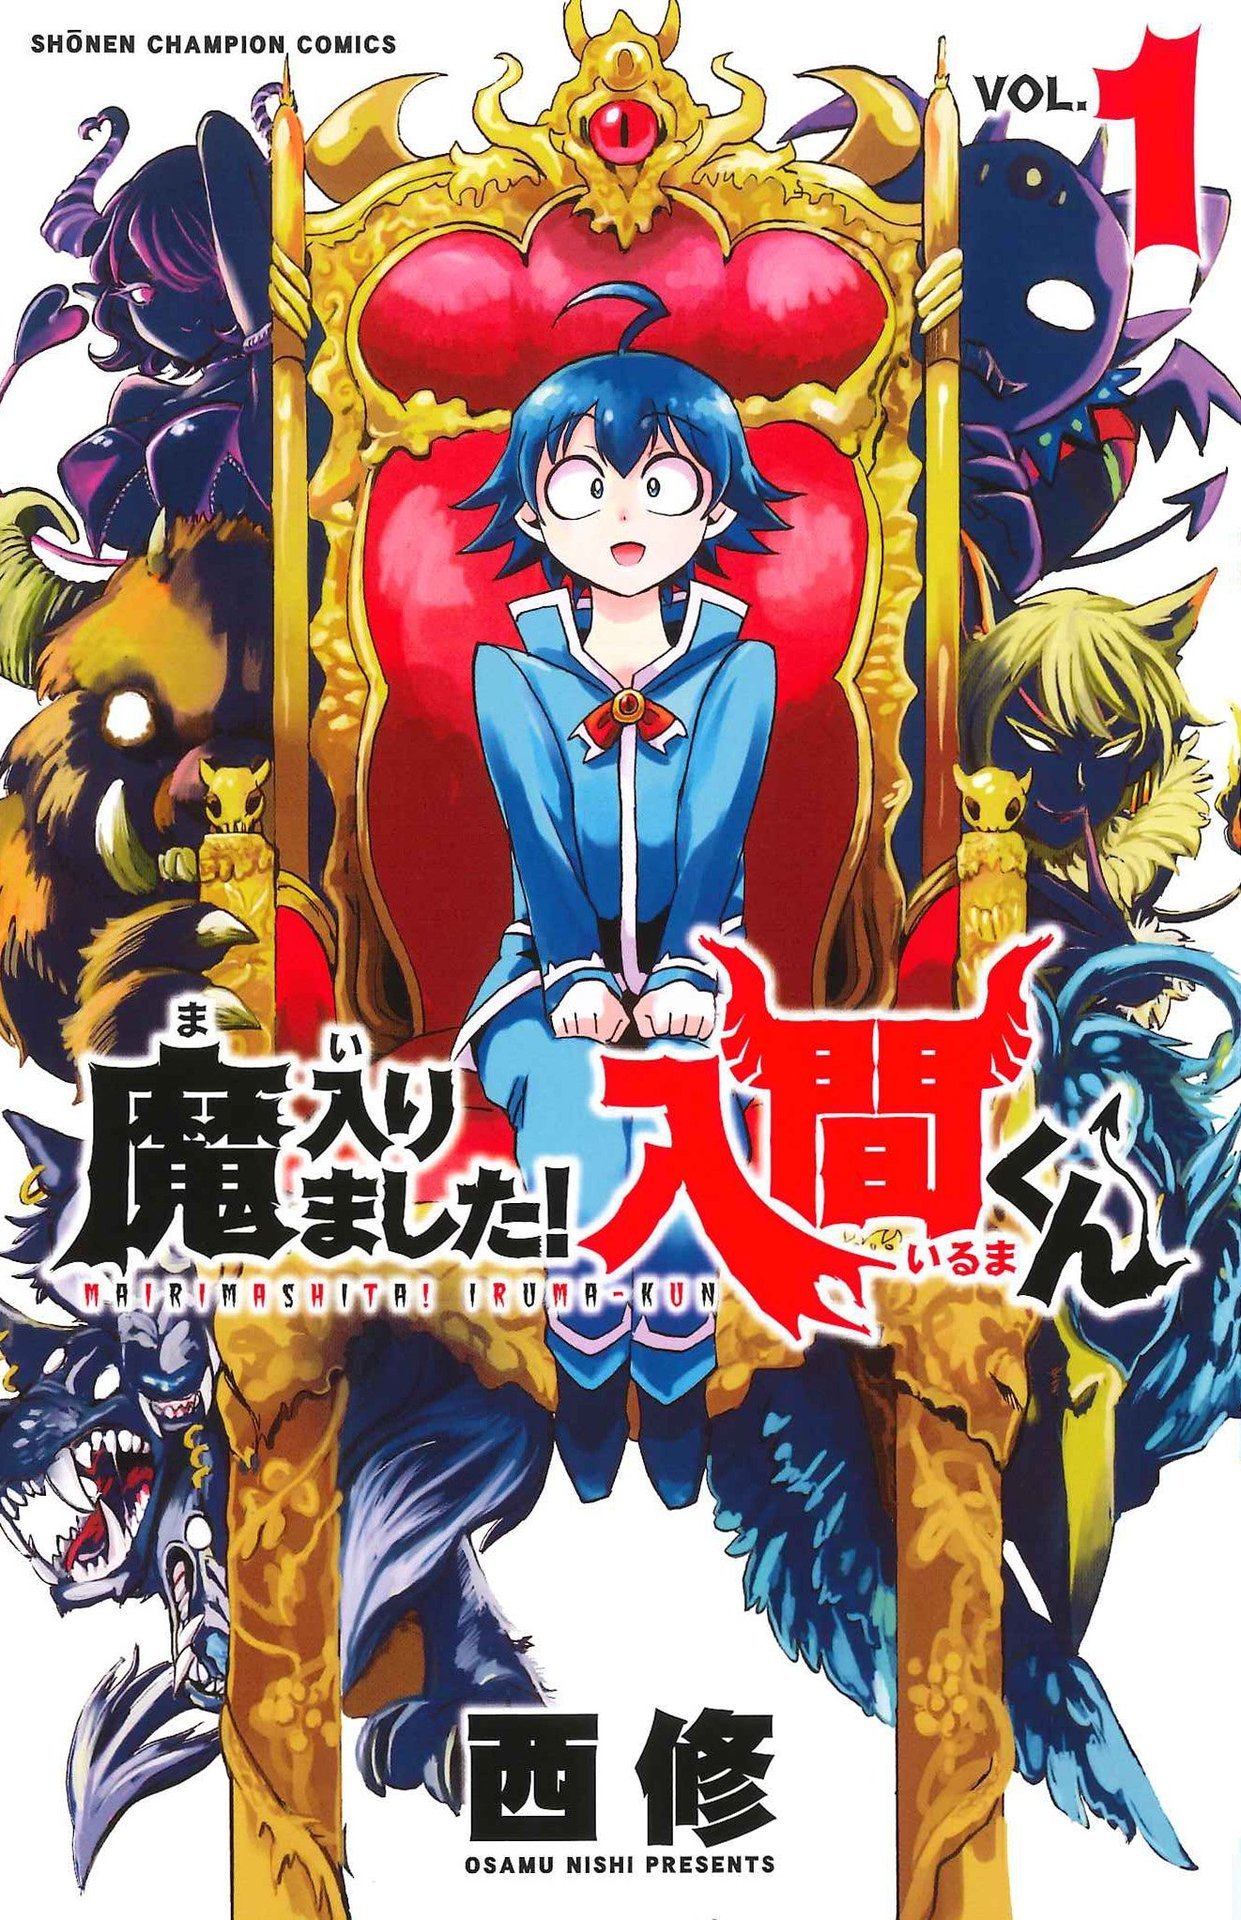 Osamu Nishiâs manga series âMairimashita! Iruma-kunâ will also have a major announcement in this yearâs 10th issue of Shounen Champion; on sale February 7th.